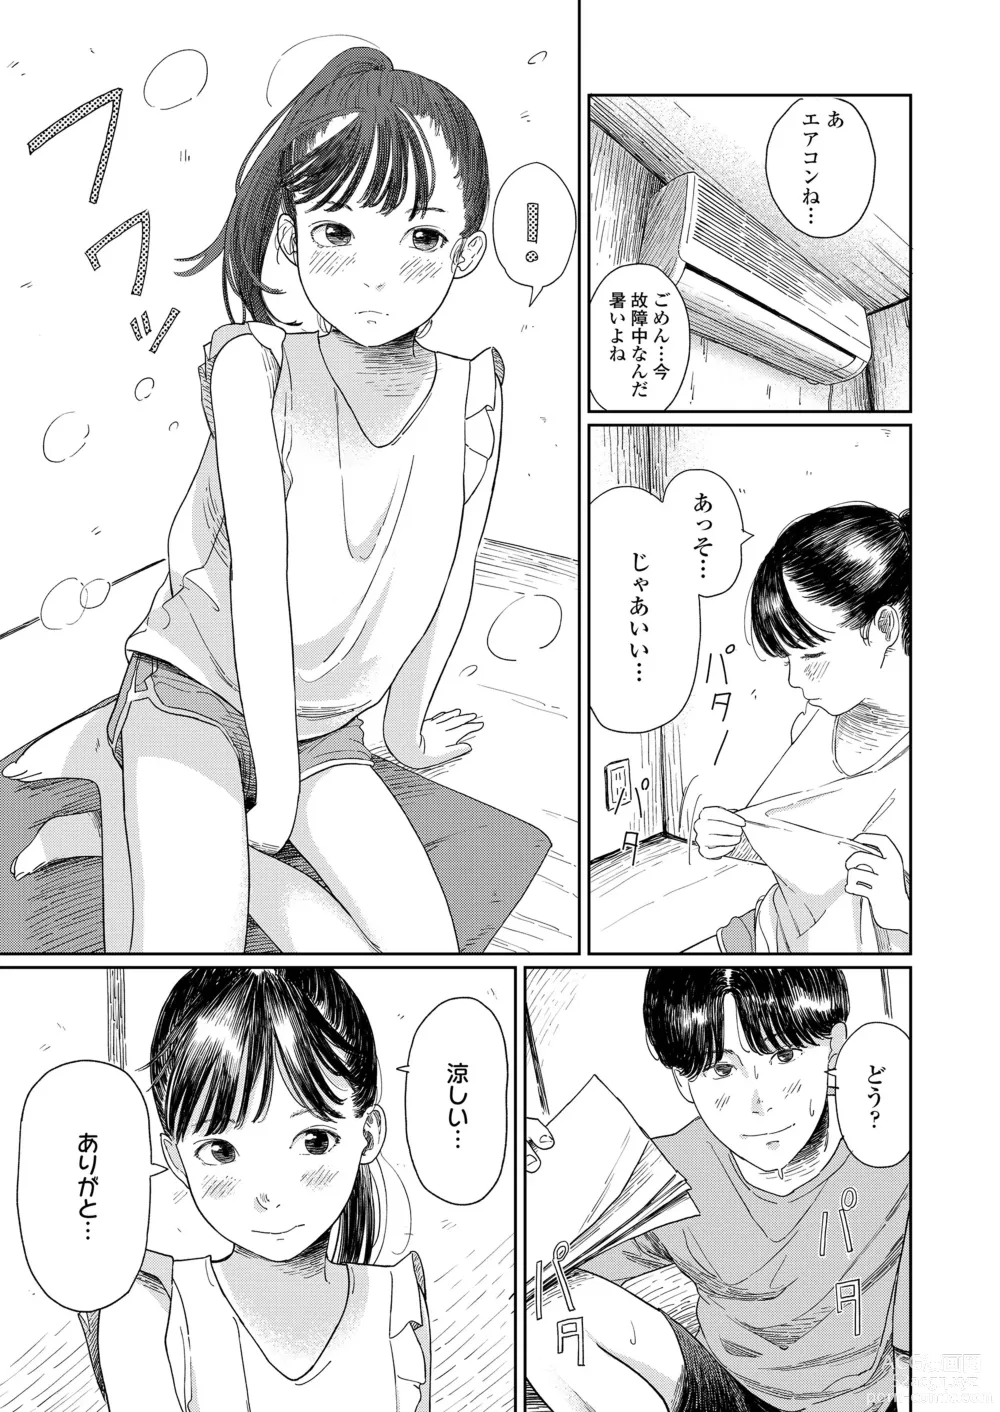 Page 9 of manga COMIC LOE VOL.4 NEXT